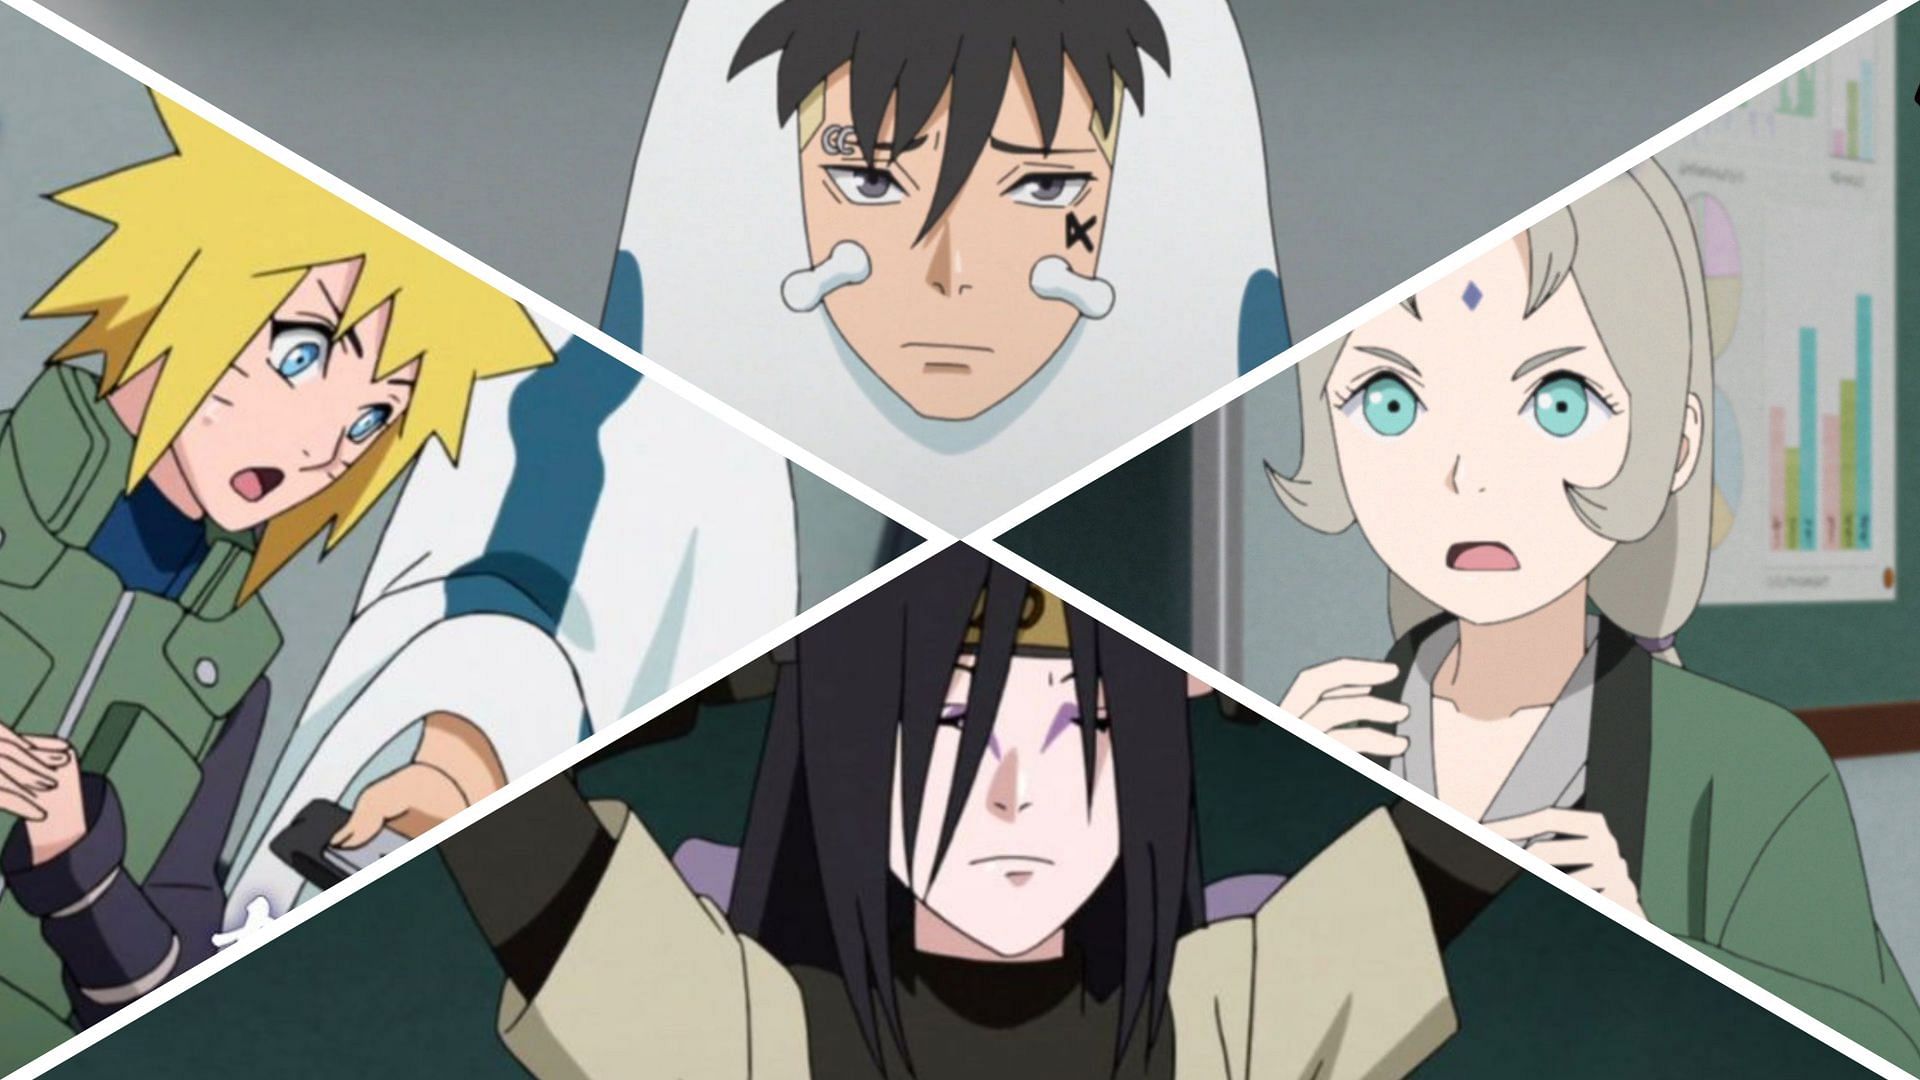 VIZ on X: #Boruto: Naruto Next Generations, Episode 267 - Kawaki's Cover  Blown?!” is now live on @hulu!  / X